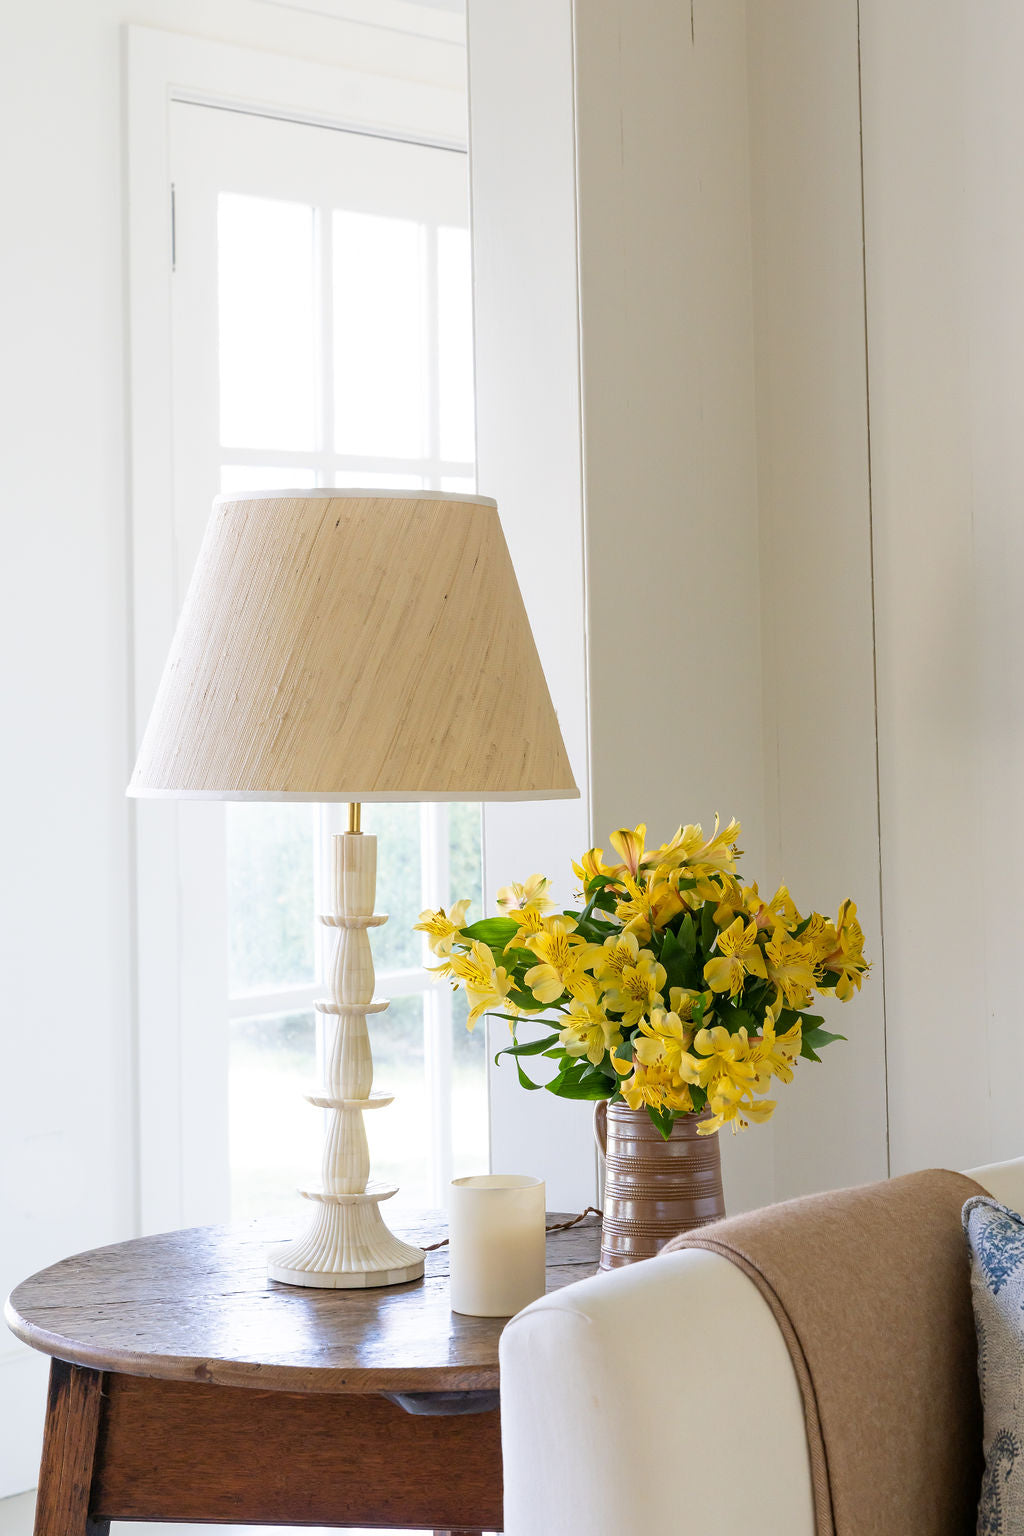 Karni Mata Bone Inlay Table Lamp by Penny Morrison | Newport Lamp And Shade | Located in Newport, RI